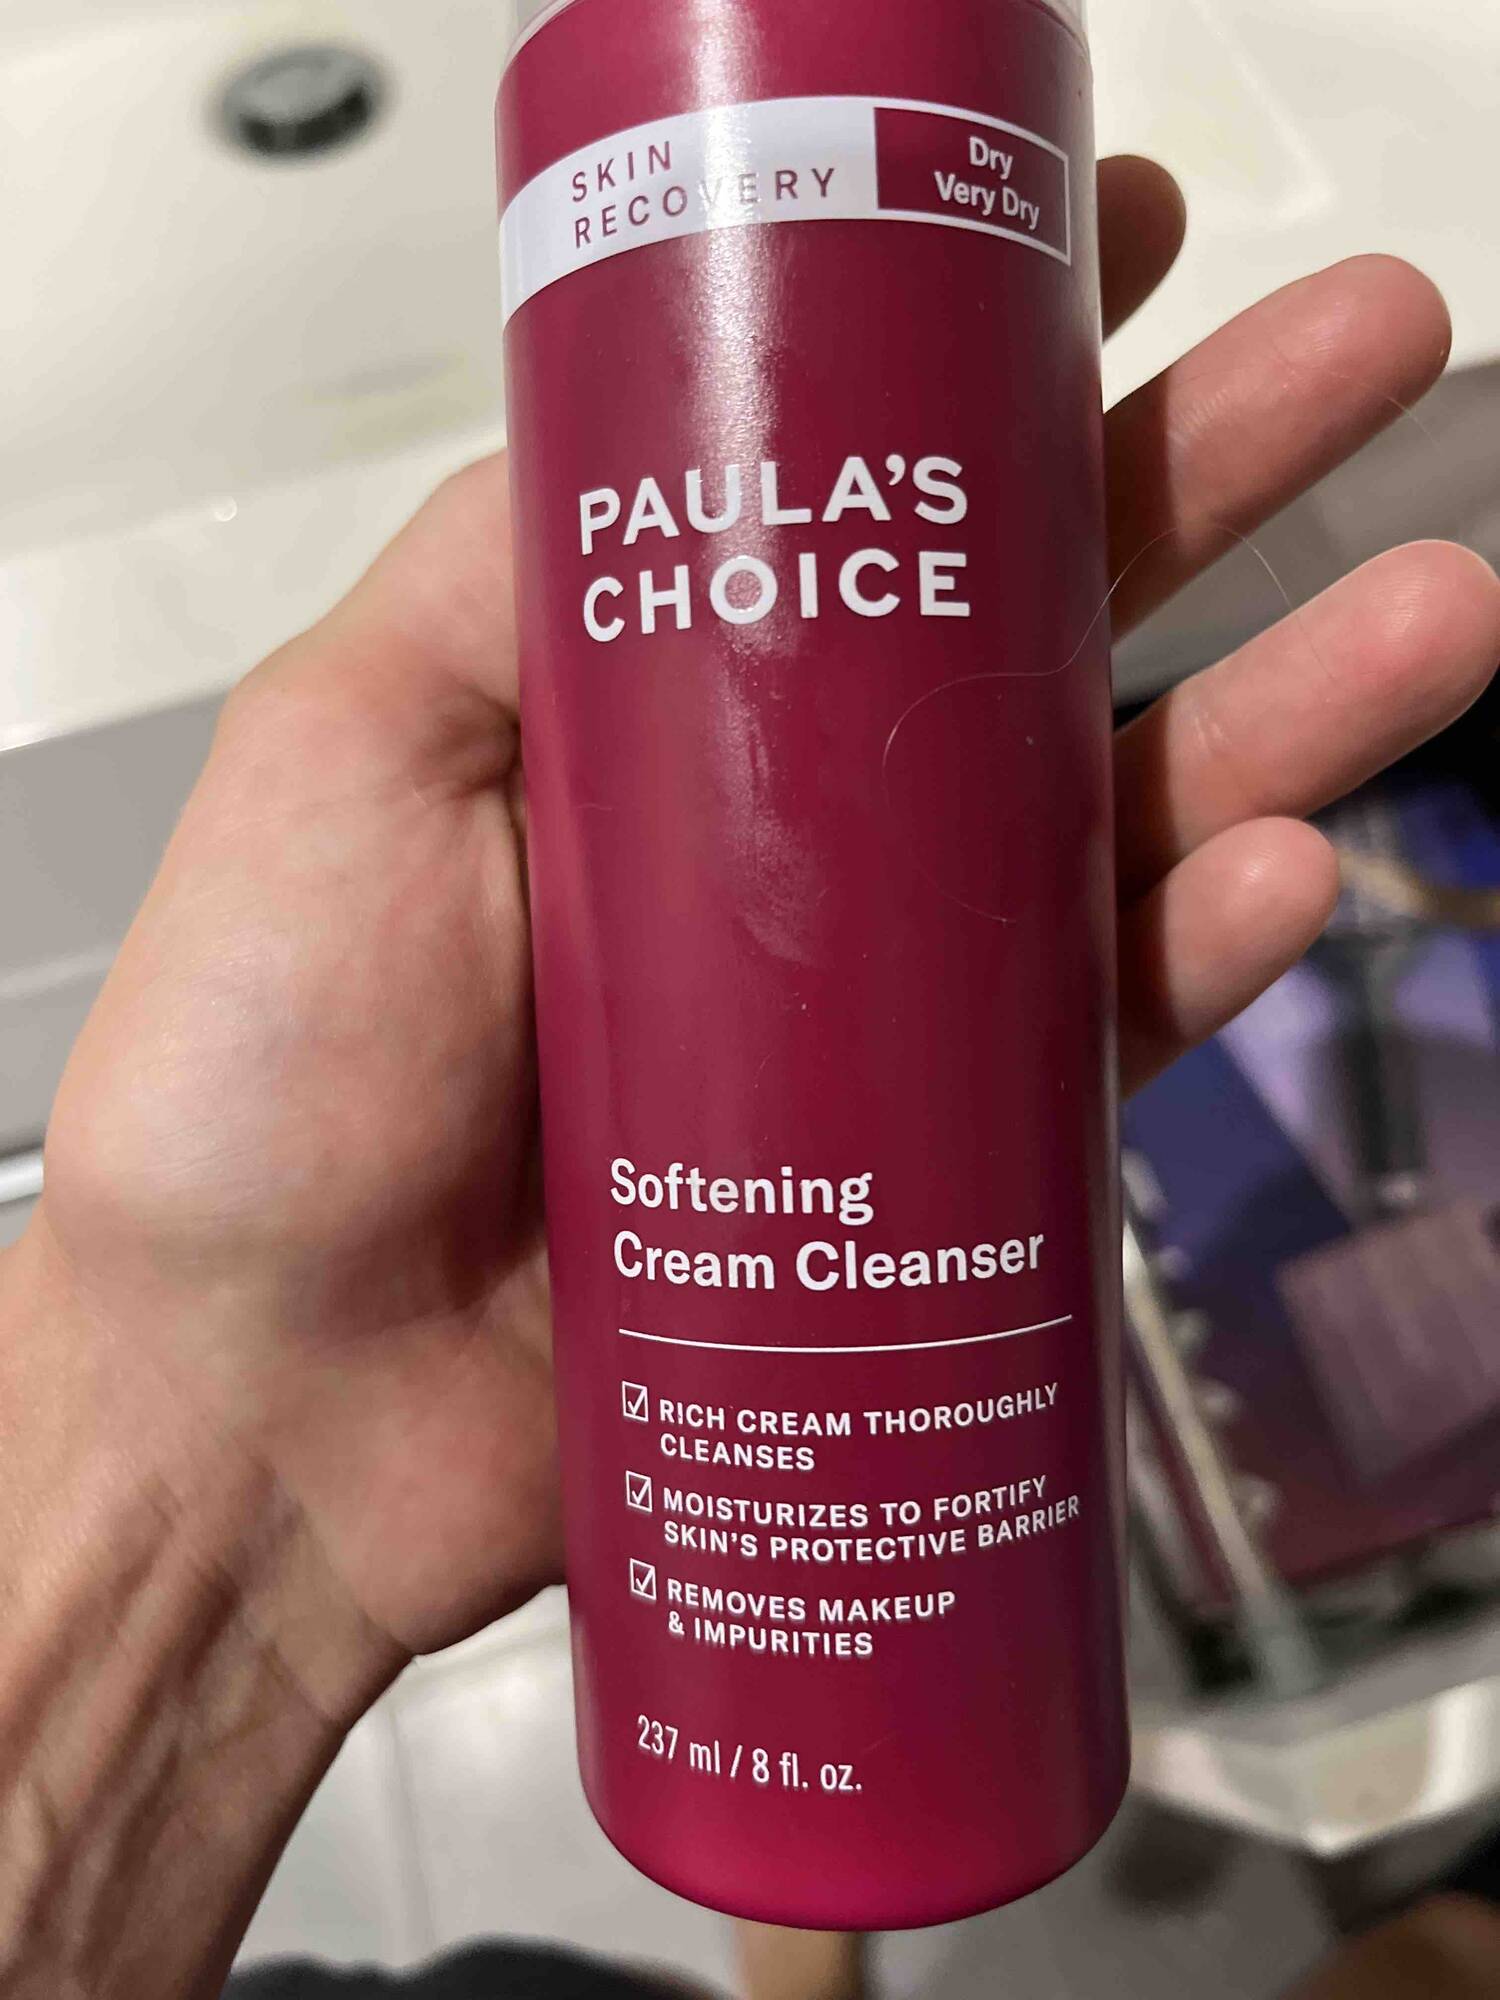 PAULA'S CHOICE - Softening cream cleanser